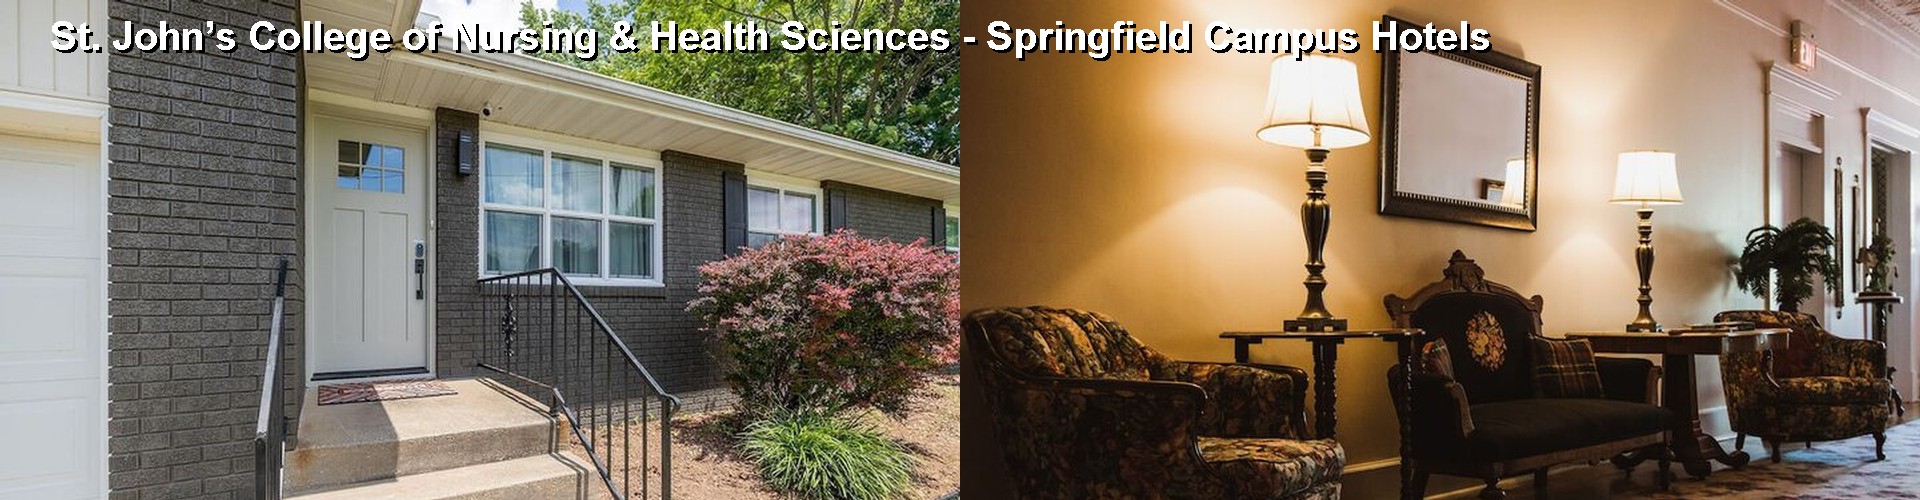 5 Best Hotels near St. John’s College of Nursing & Health Sciences - Springfield Campus